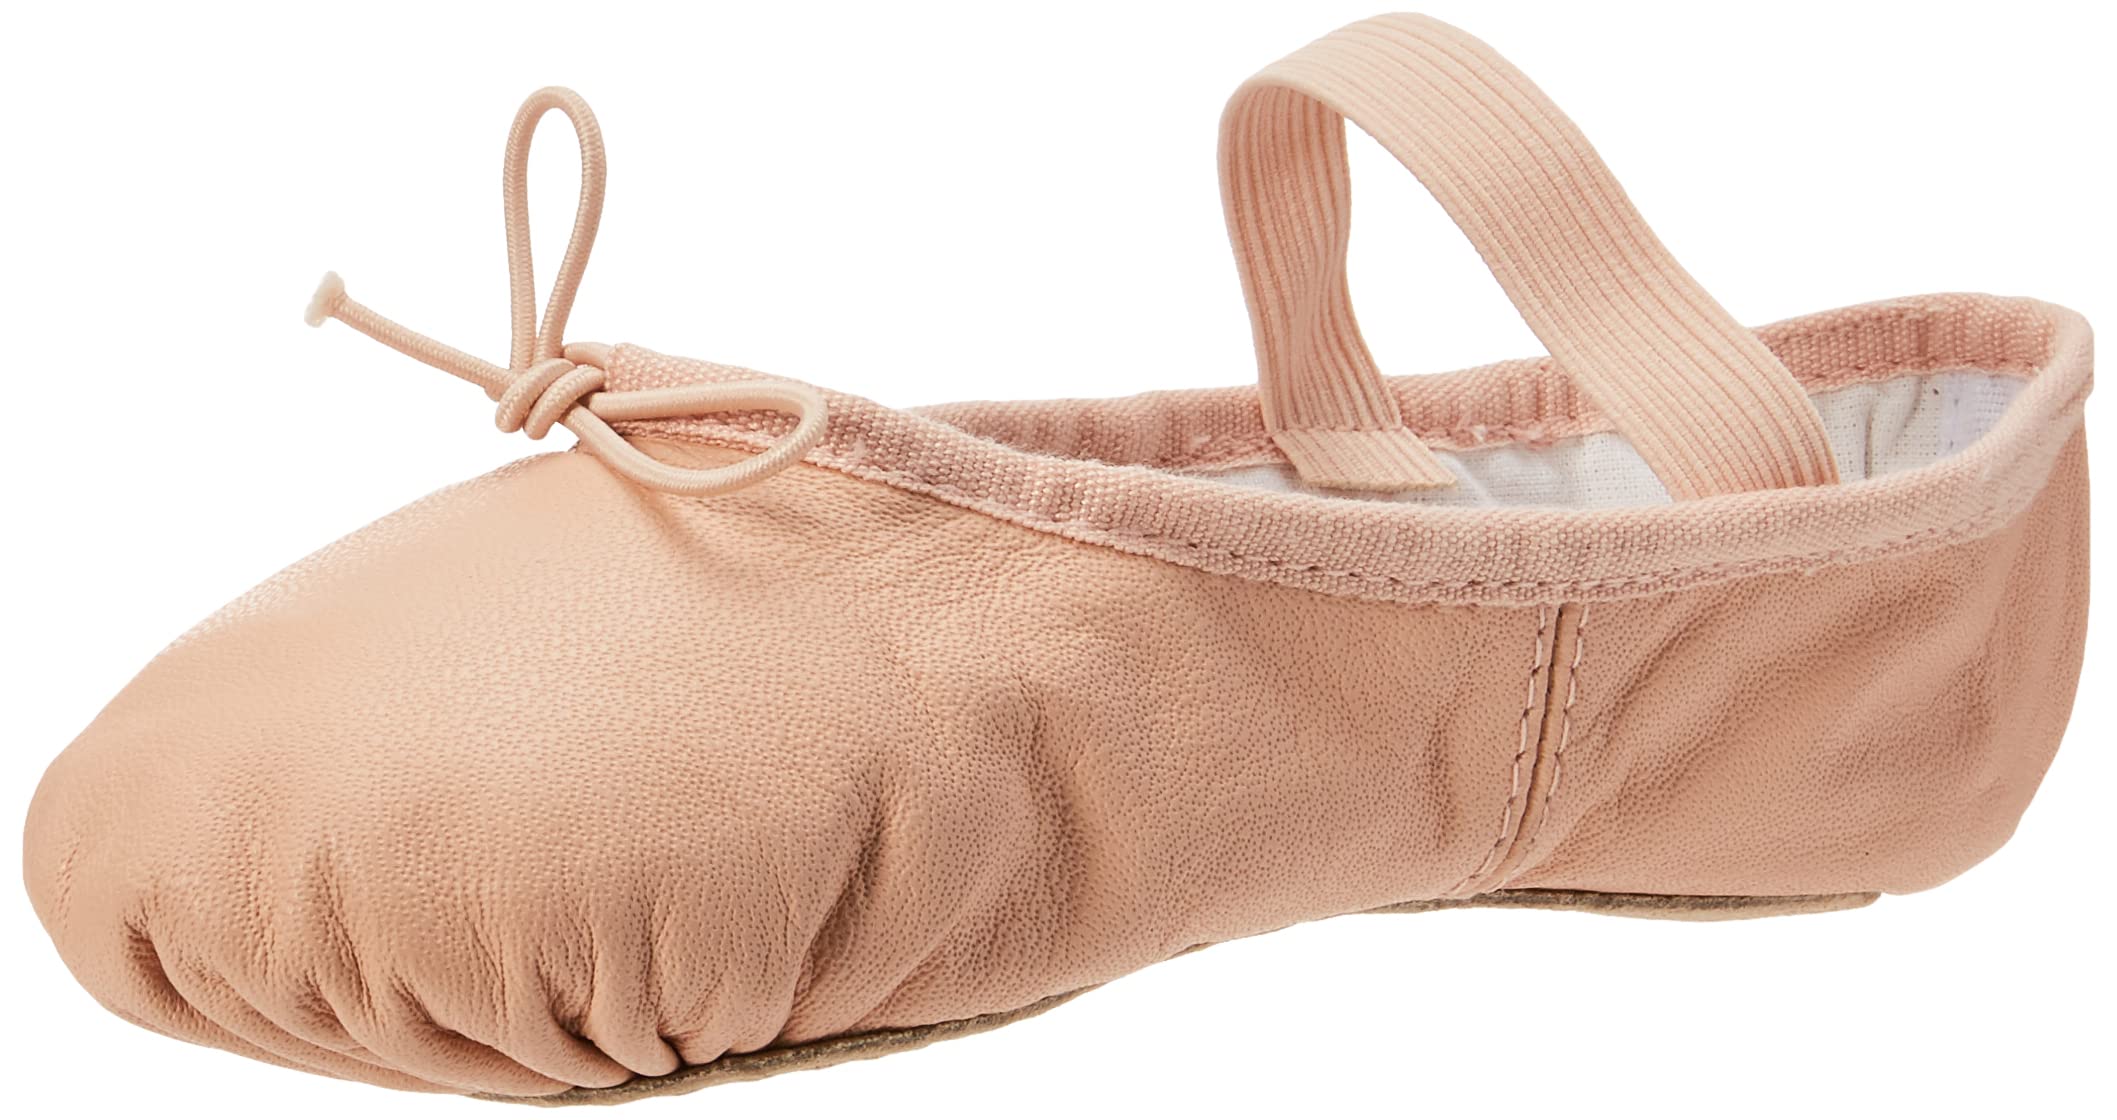 Bloch Unisex-Child Dansoft Full Sole Leather, Toddler, Cotton Lining, Dance Shoe